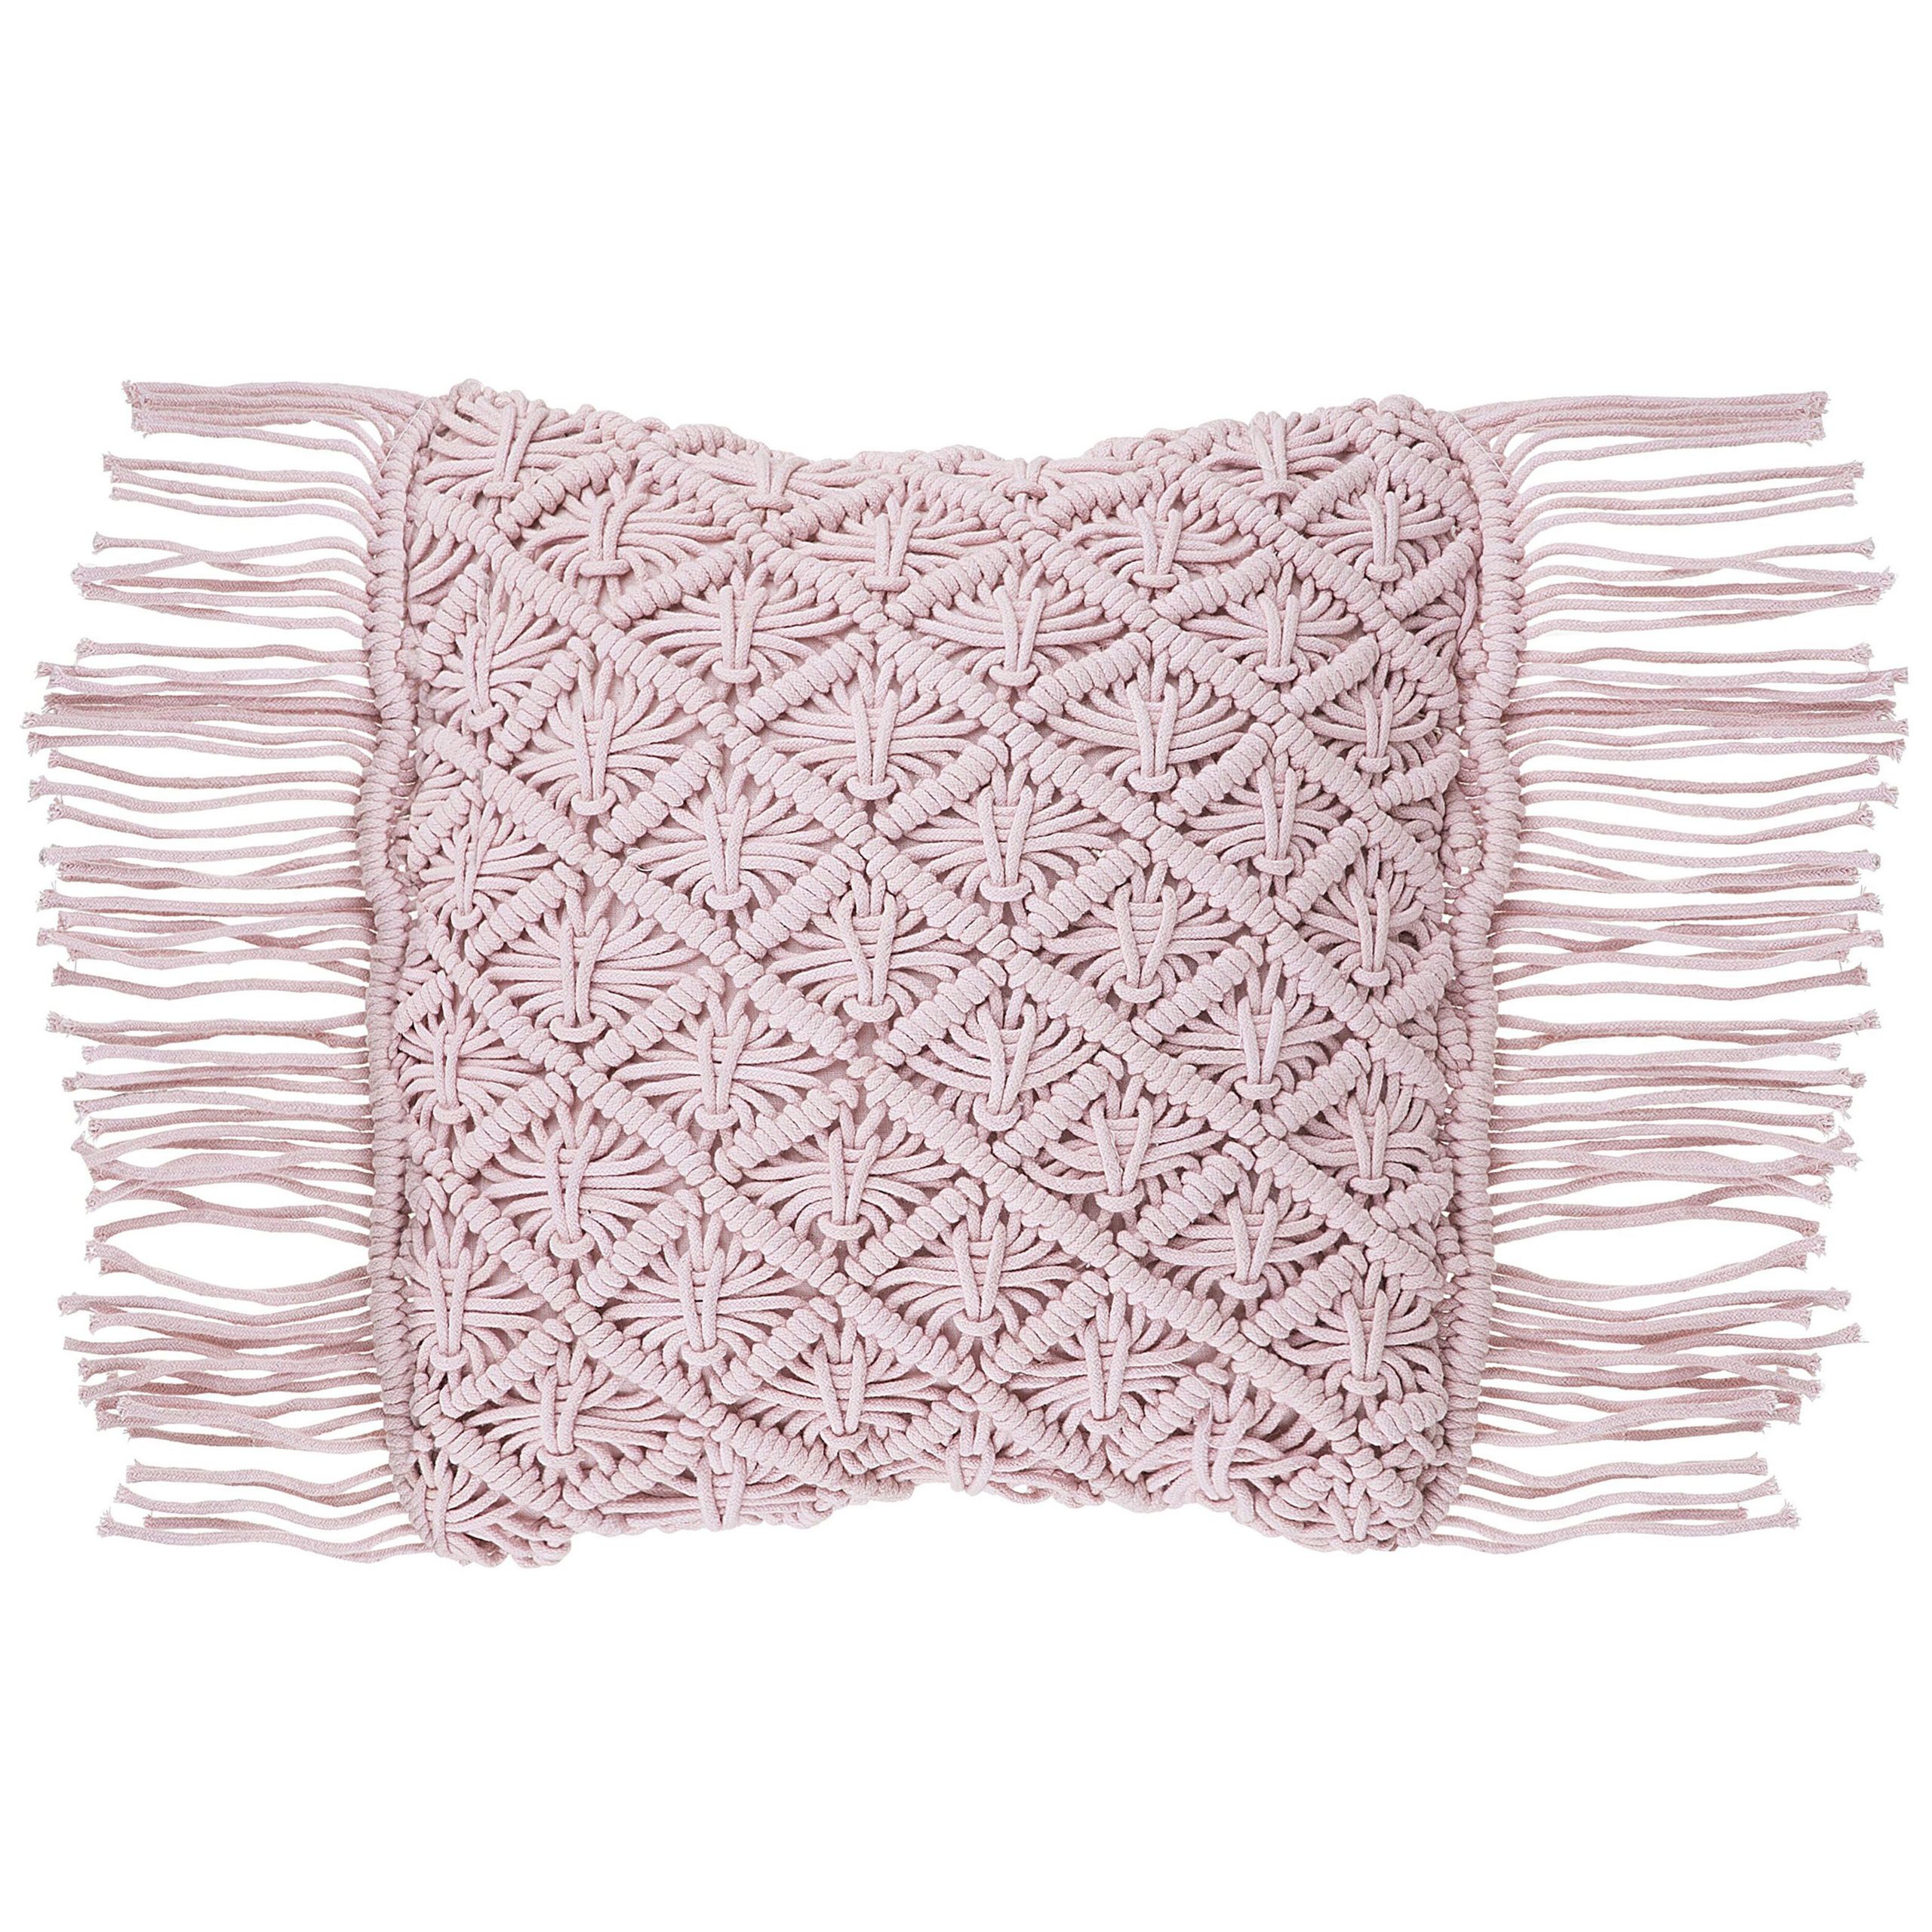 Beliani Decorative Cushion Pink Cotton Macramé 40 x 40 cm with Tassels Rope Boho Retro Decor Accessories